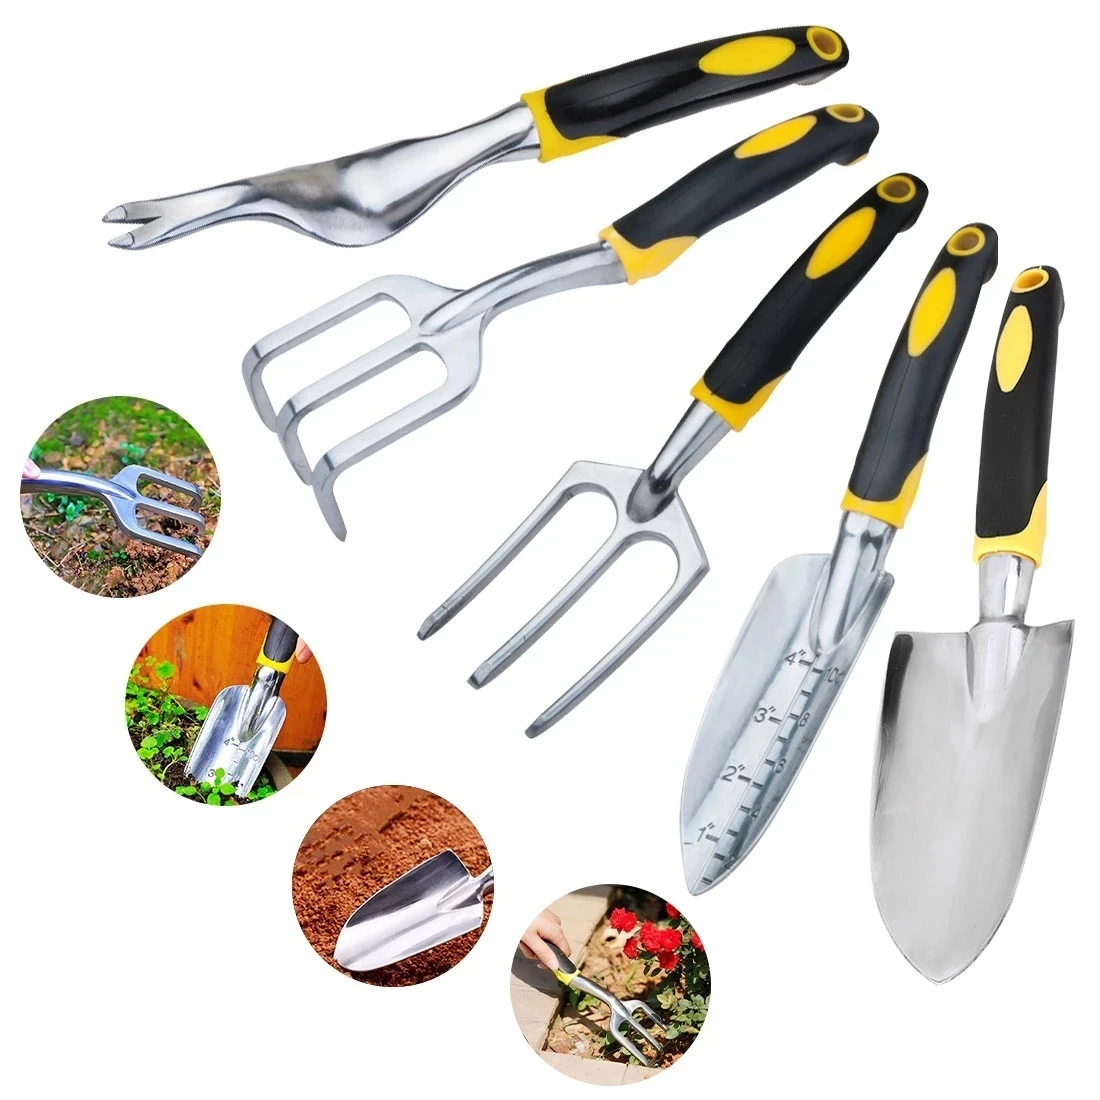 

Manual Gardening Tool Set Hand Rake Shovel With Scale Transplant Dig Weeder Cultivator Trowel Non-Slip Ergonomic Handle Tools